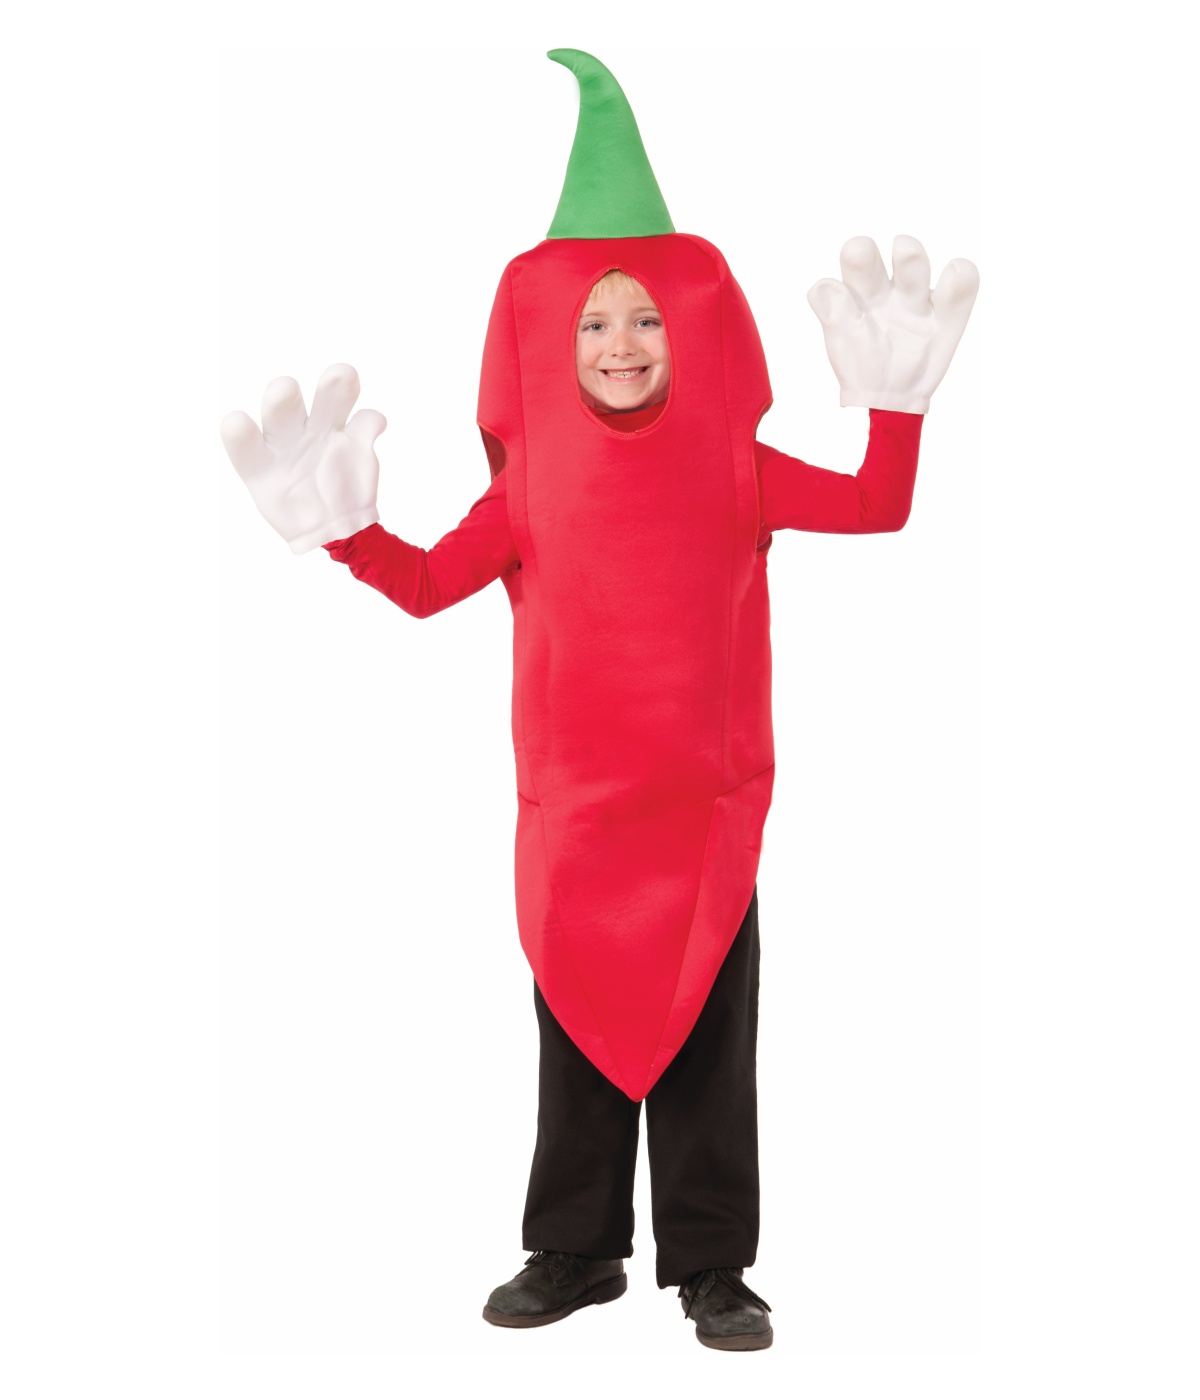  Boys Hot Pepper Costume